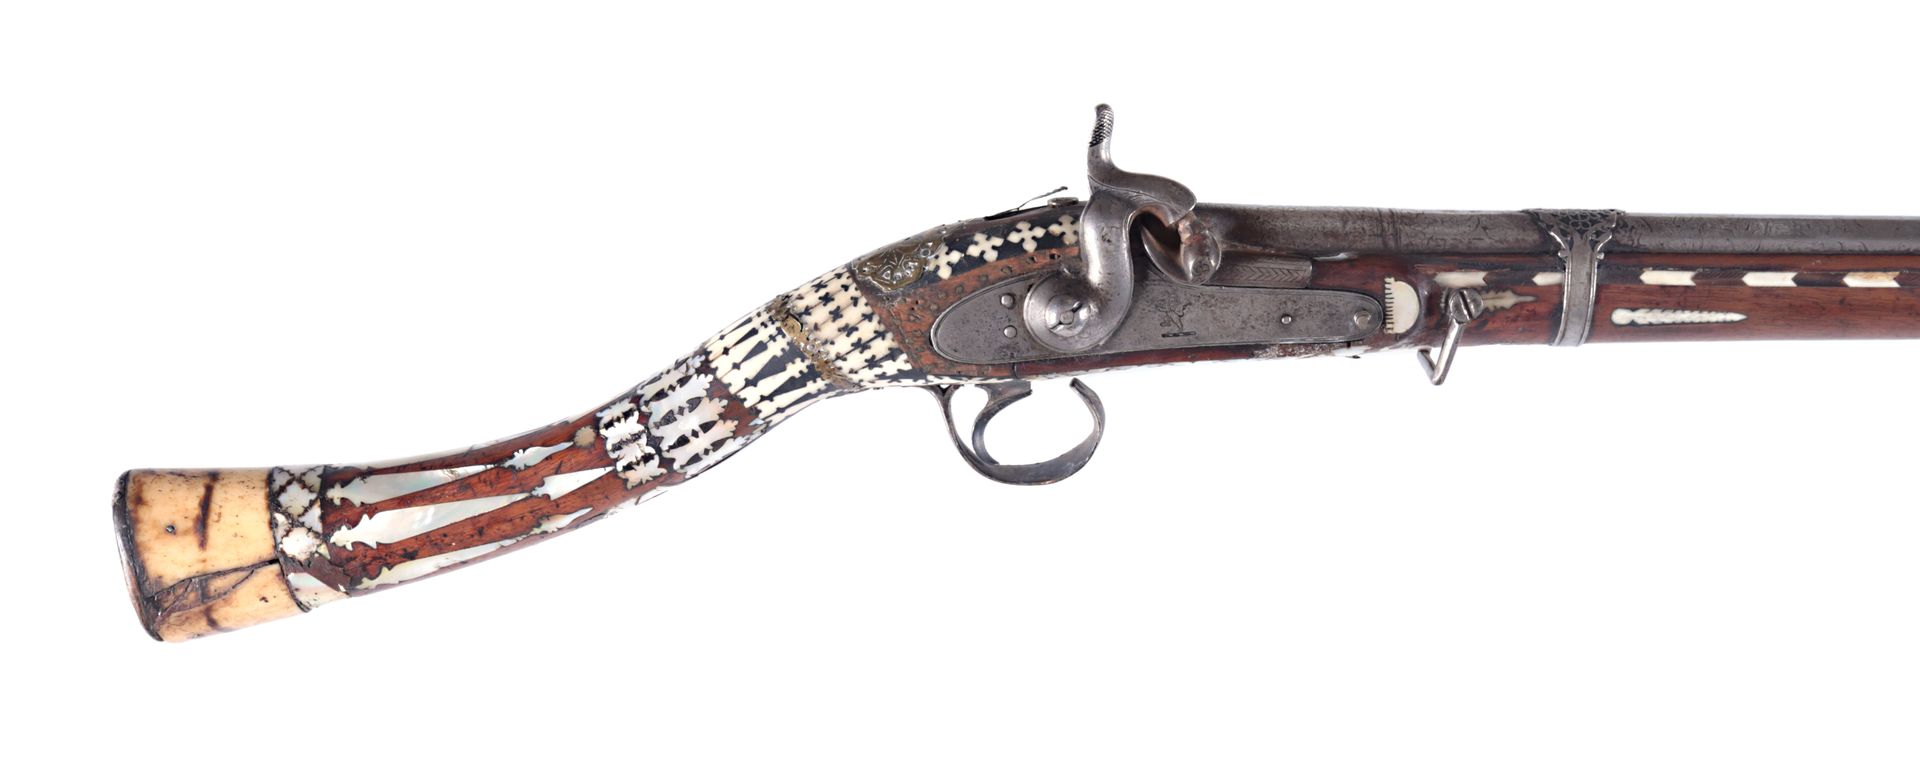 A Georgian Percussion Rifle, ca. 1850 Ein georgisches Perkussionsgewehr, ca. 185&hellip;